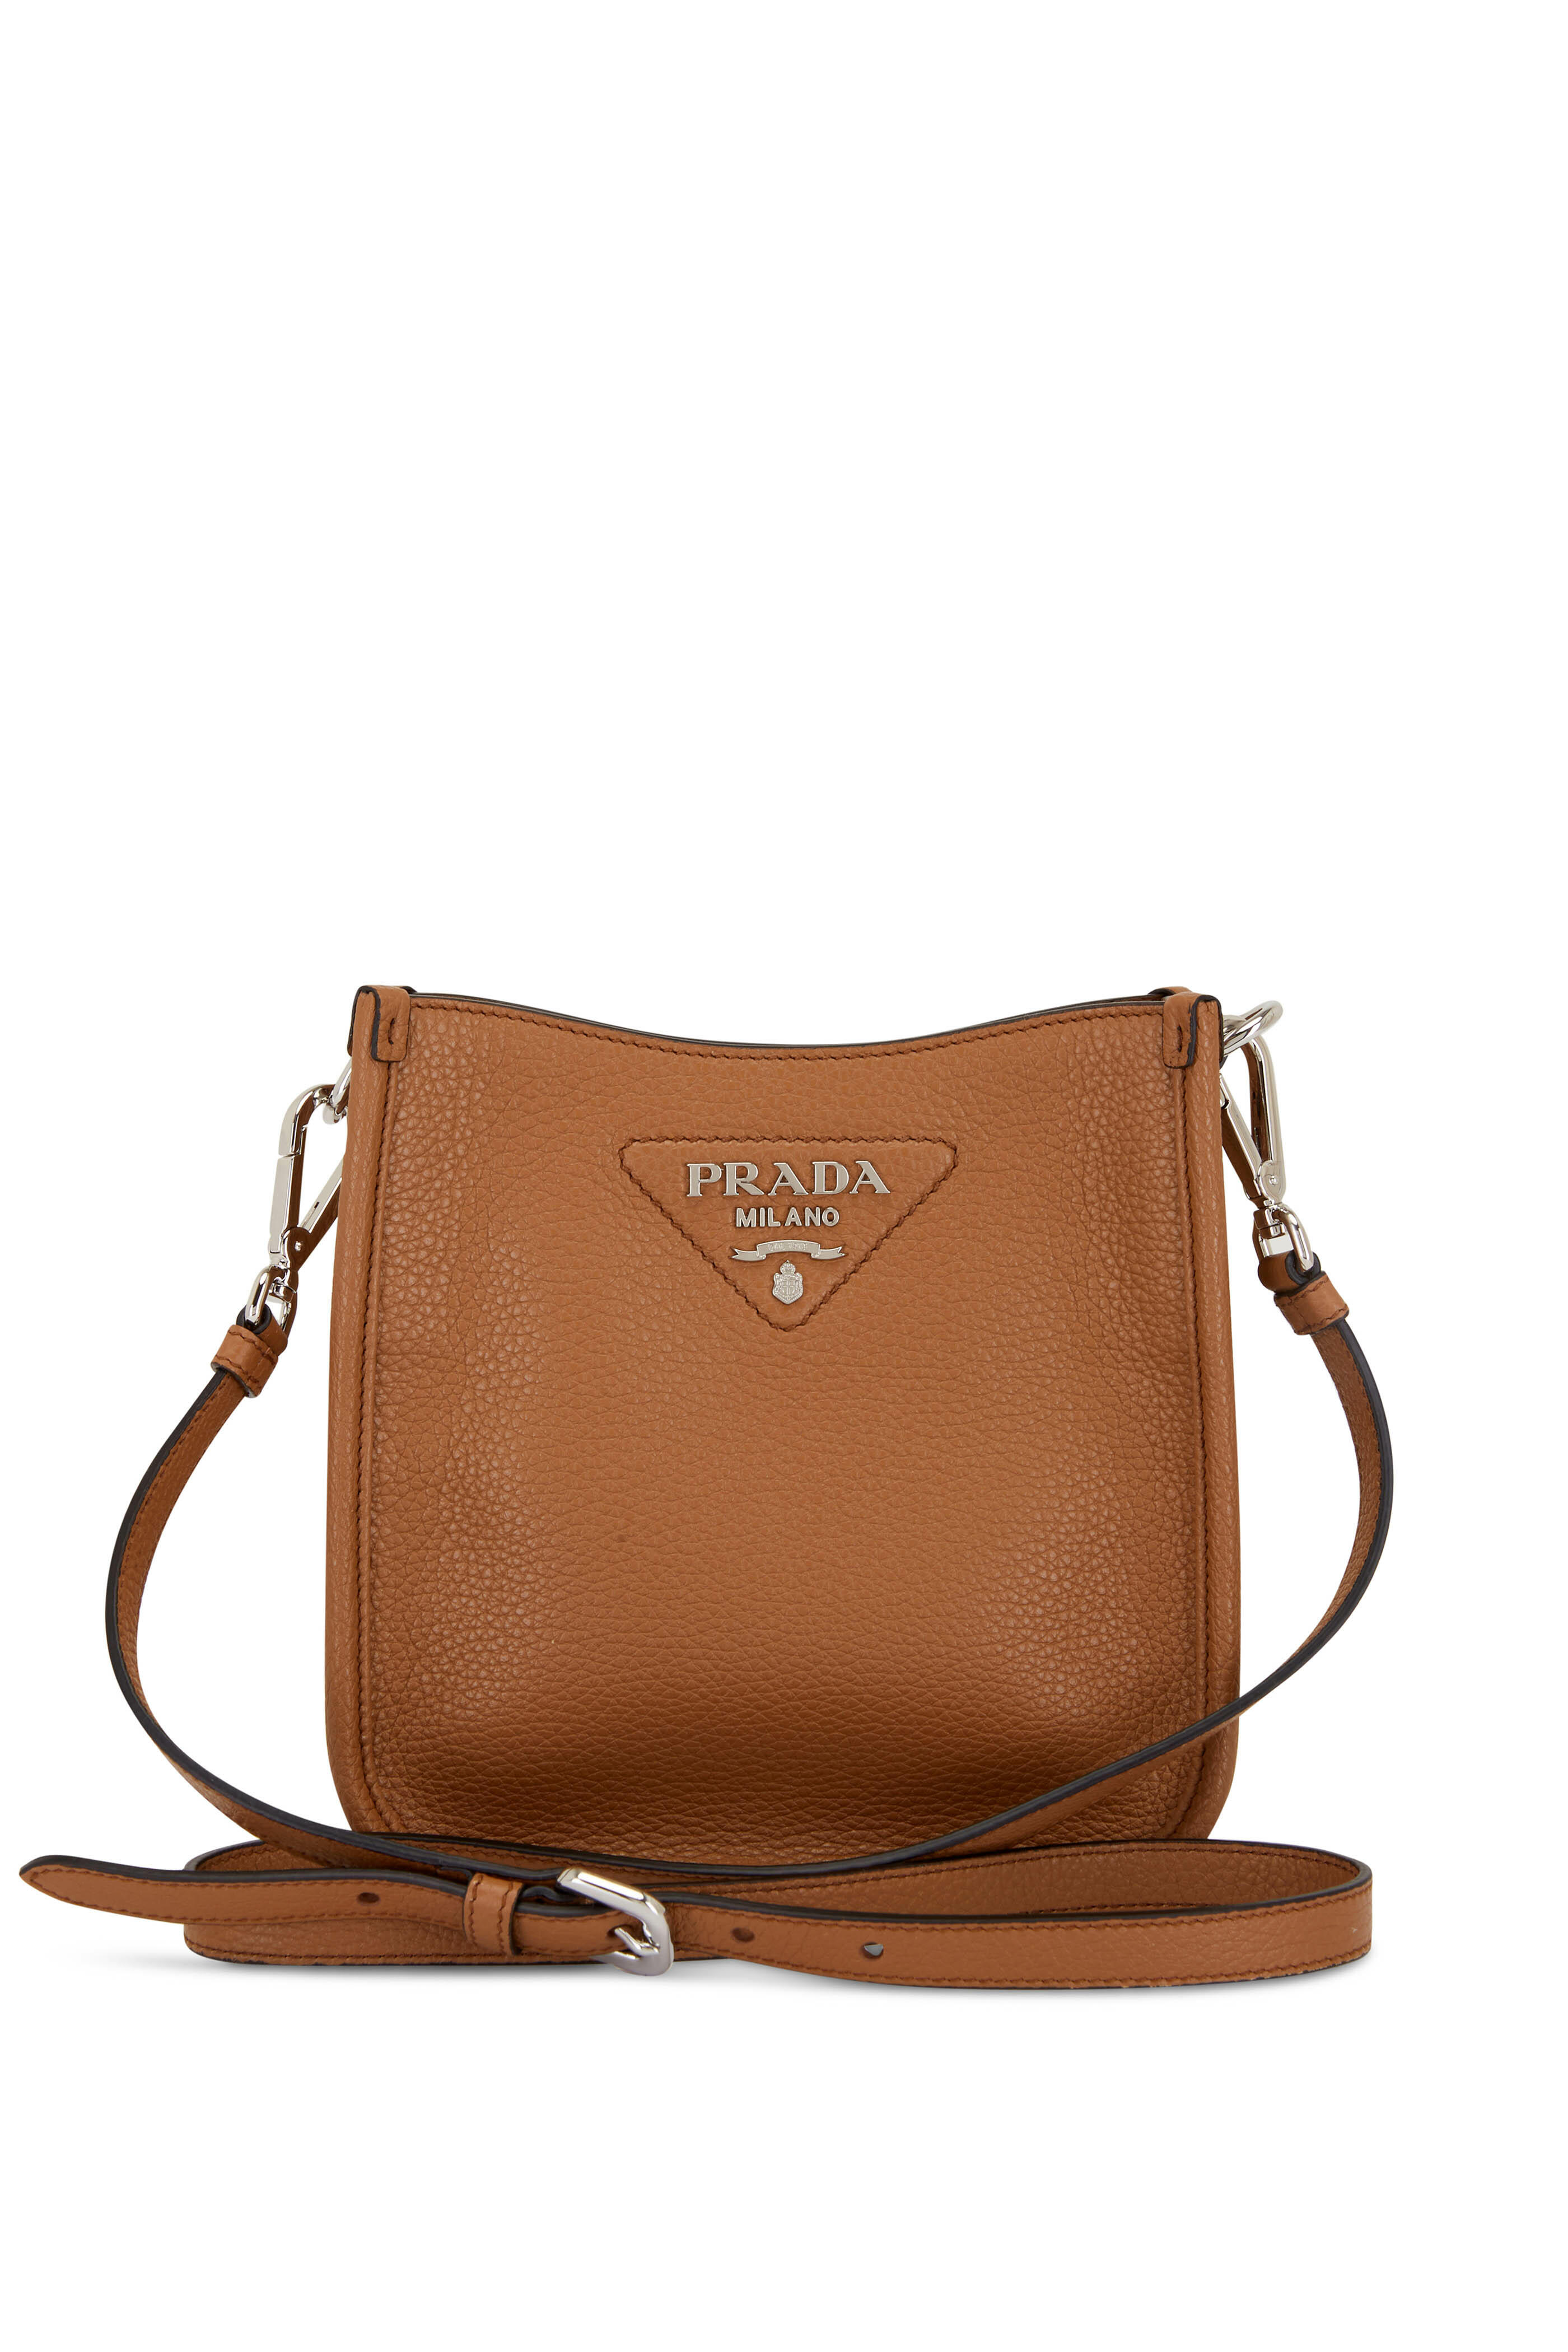 Prada - Caramel Leather Mini Shoulder Bag | Mitchell Stores